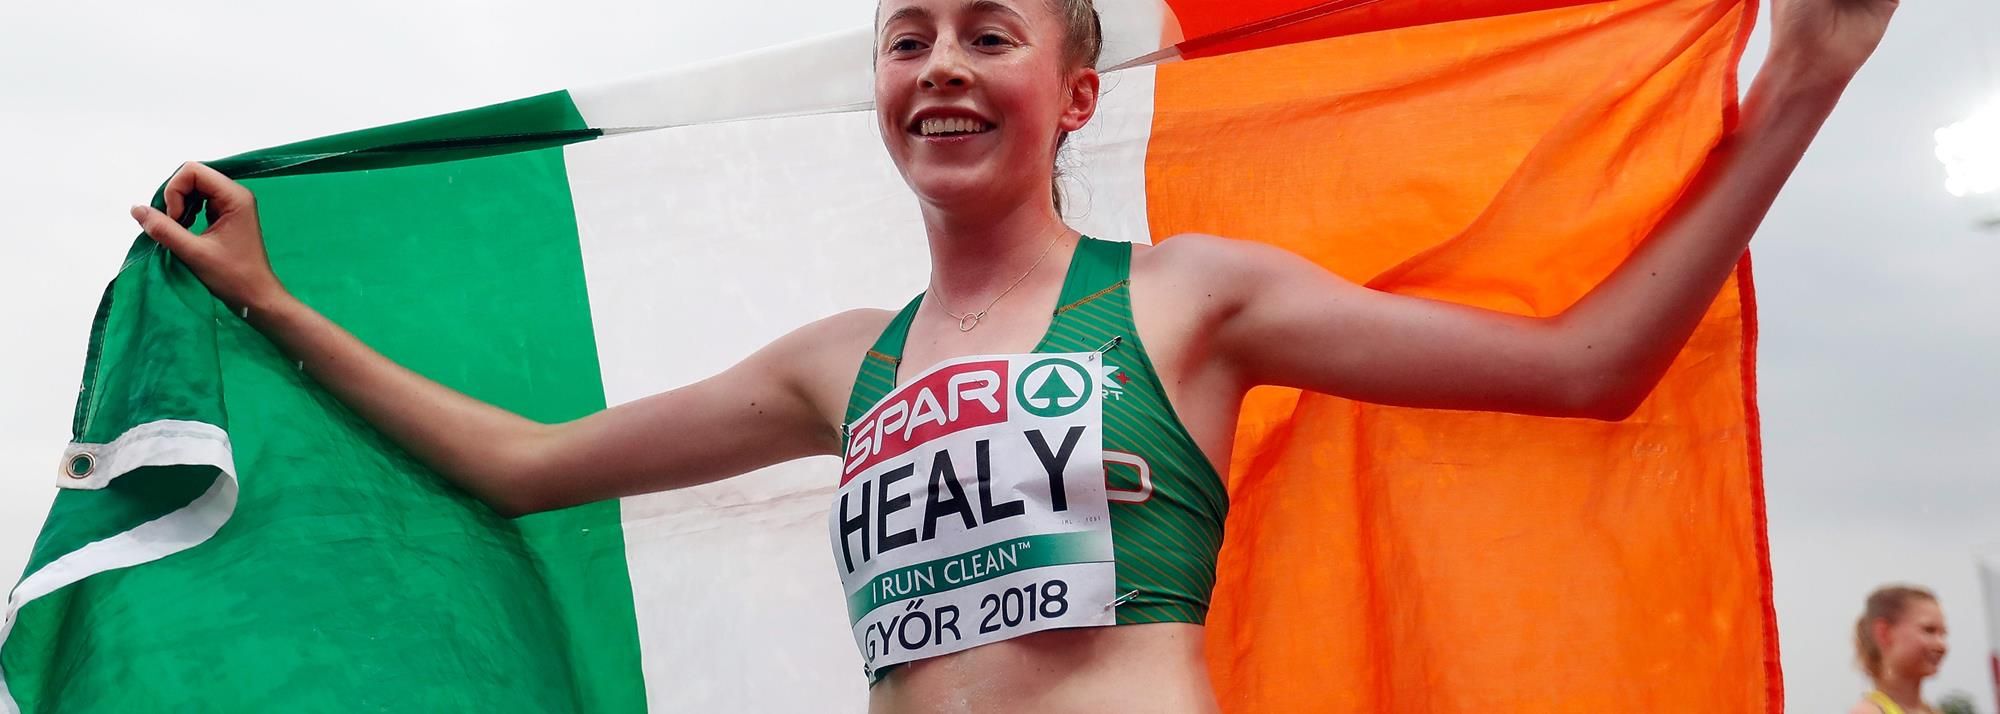 Sarah HEALY | Profile | World Athletics